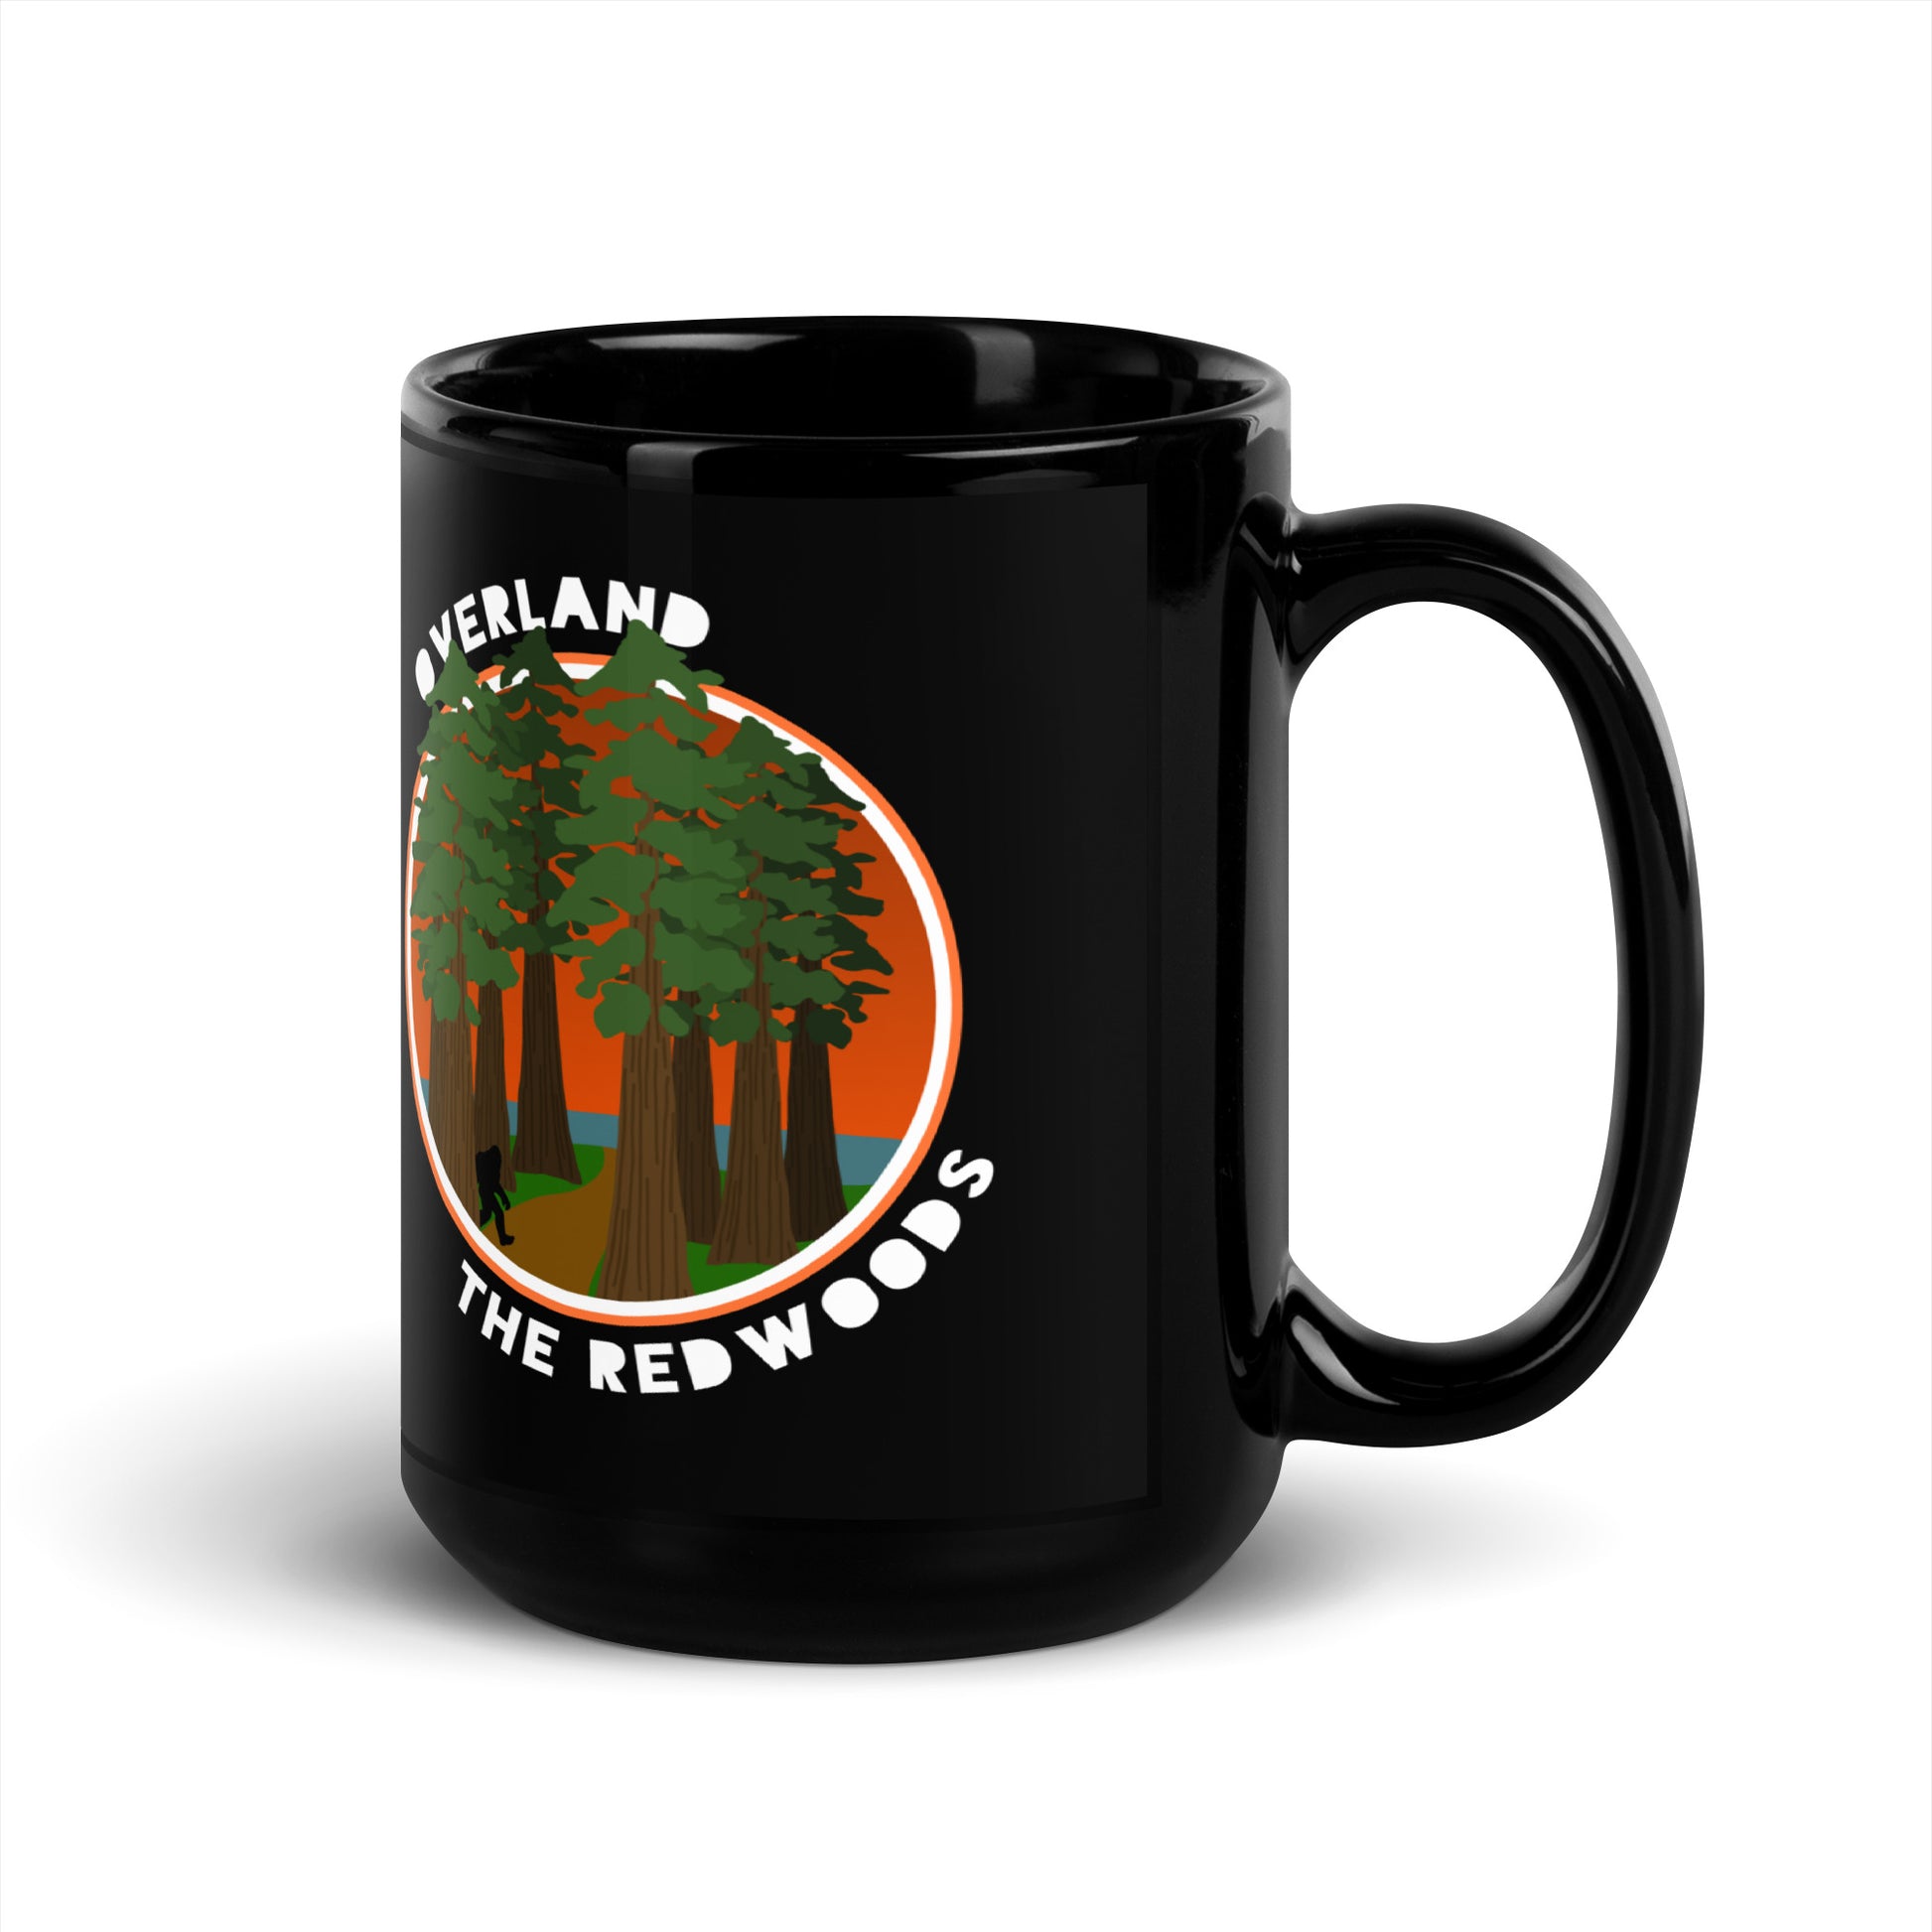 Overland the Redwoods. Bigfoot. Black 15oz coffee mug. front view. overland365.com